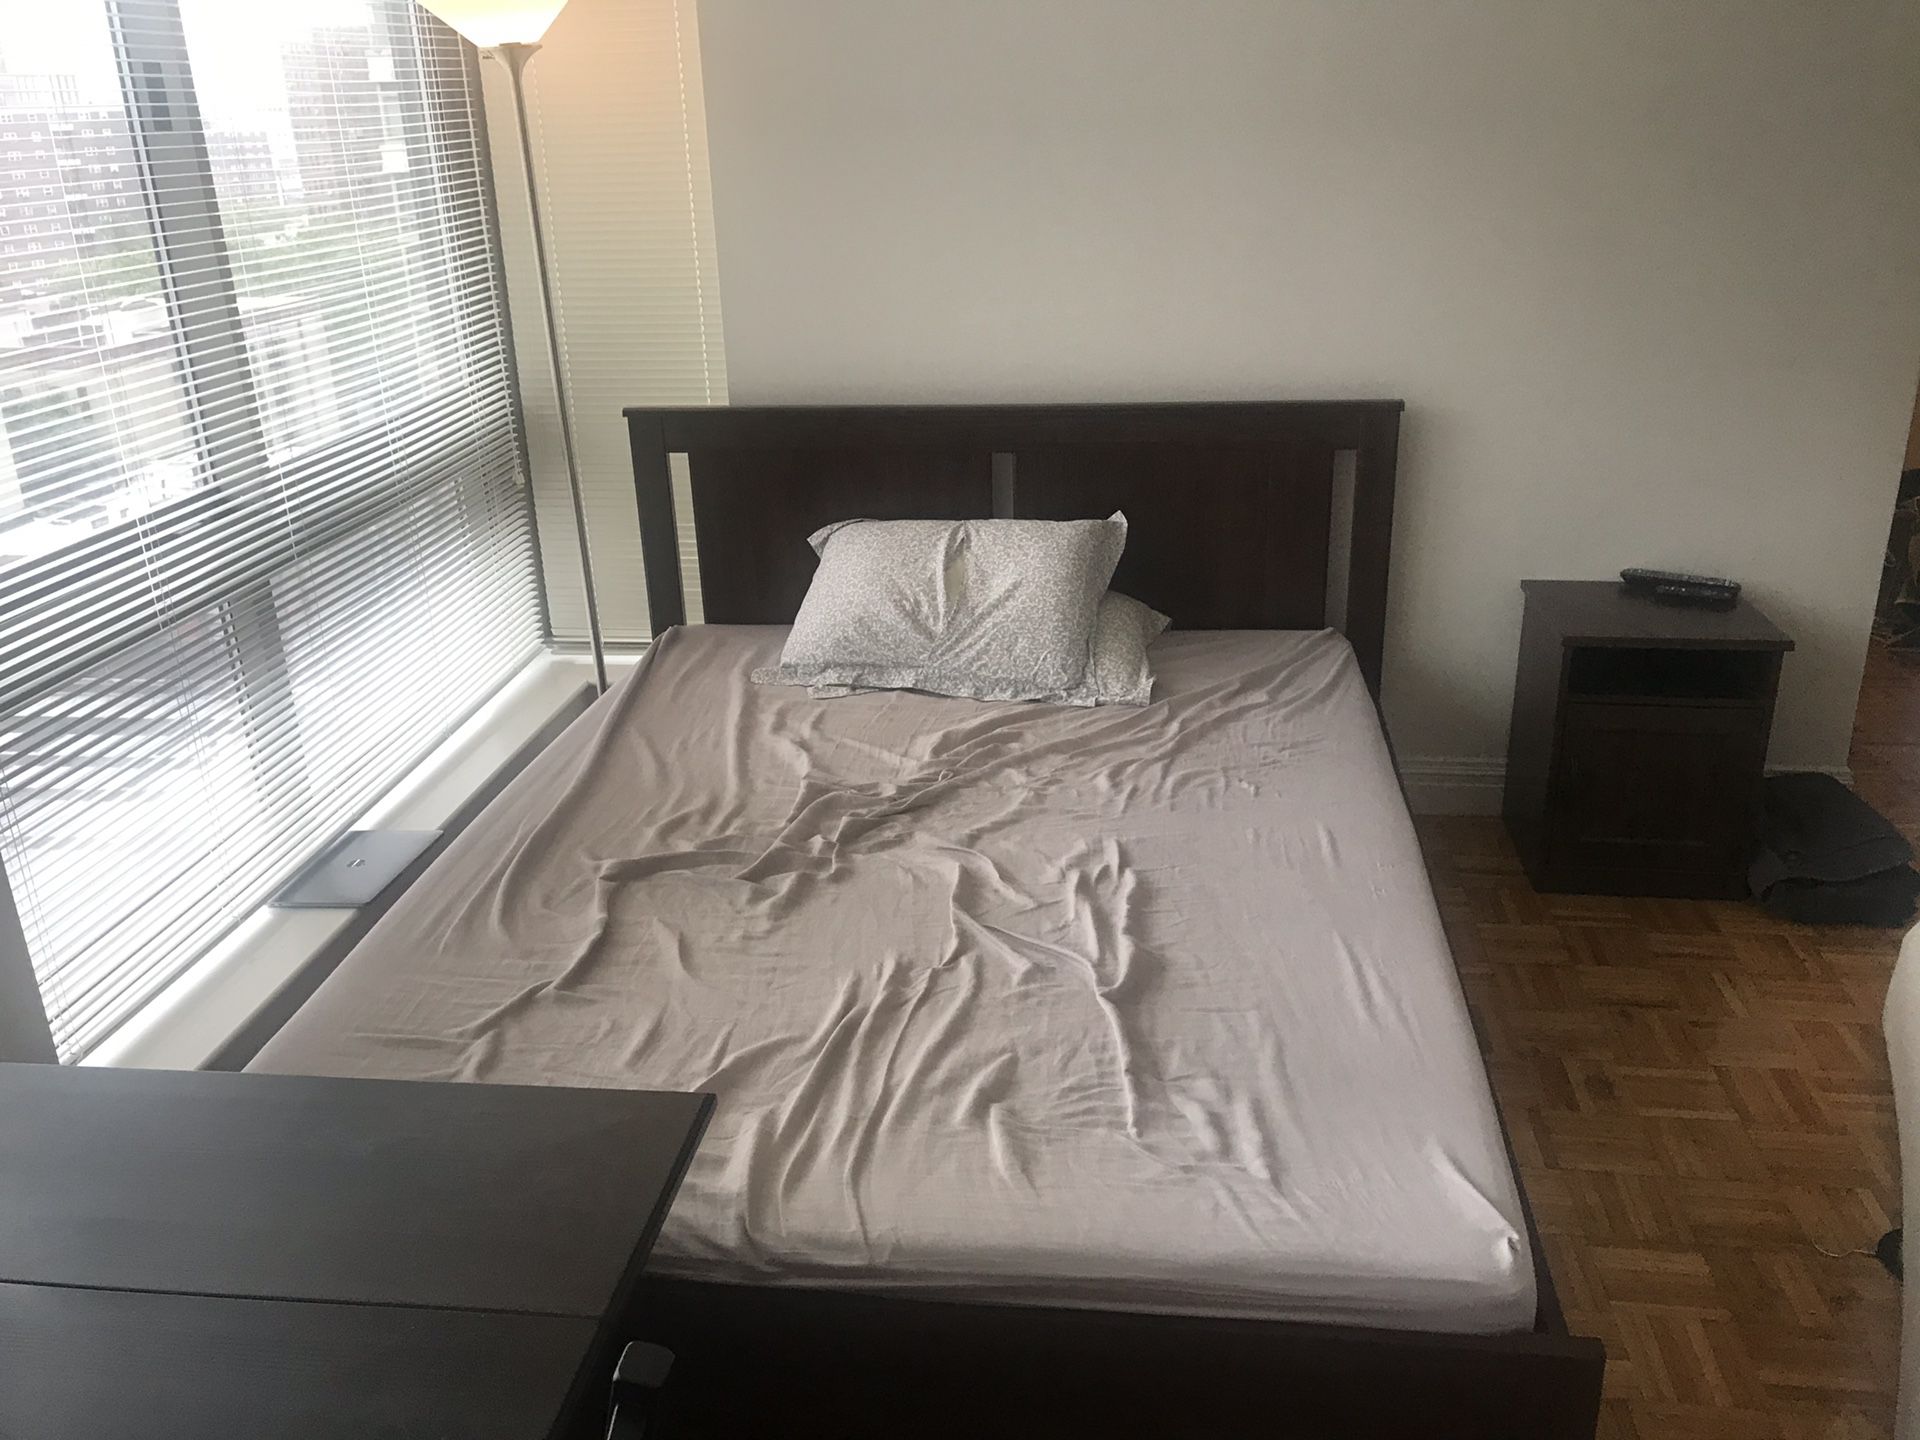 Bedframe+memory foam mattress (Songesand+Matrand IKEA)